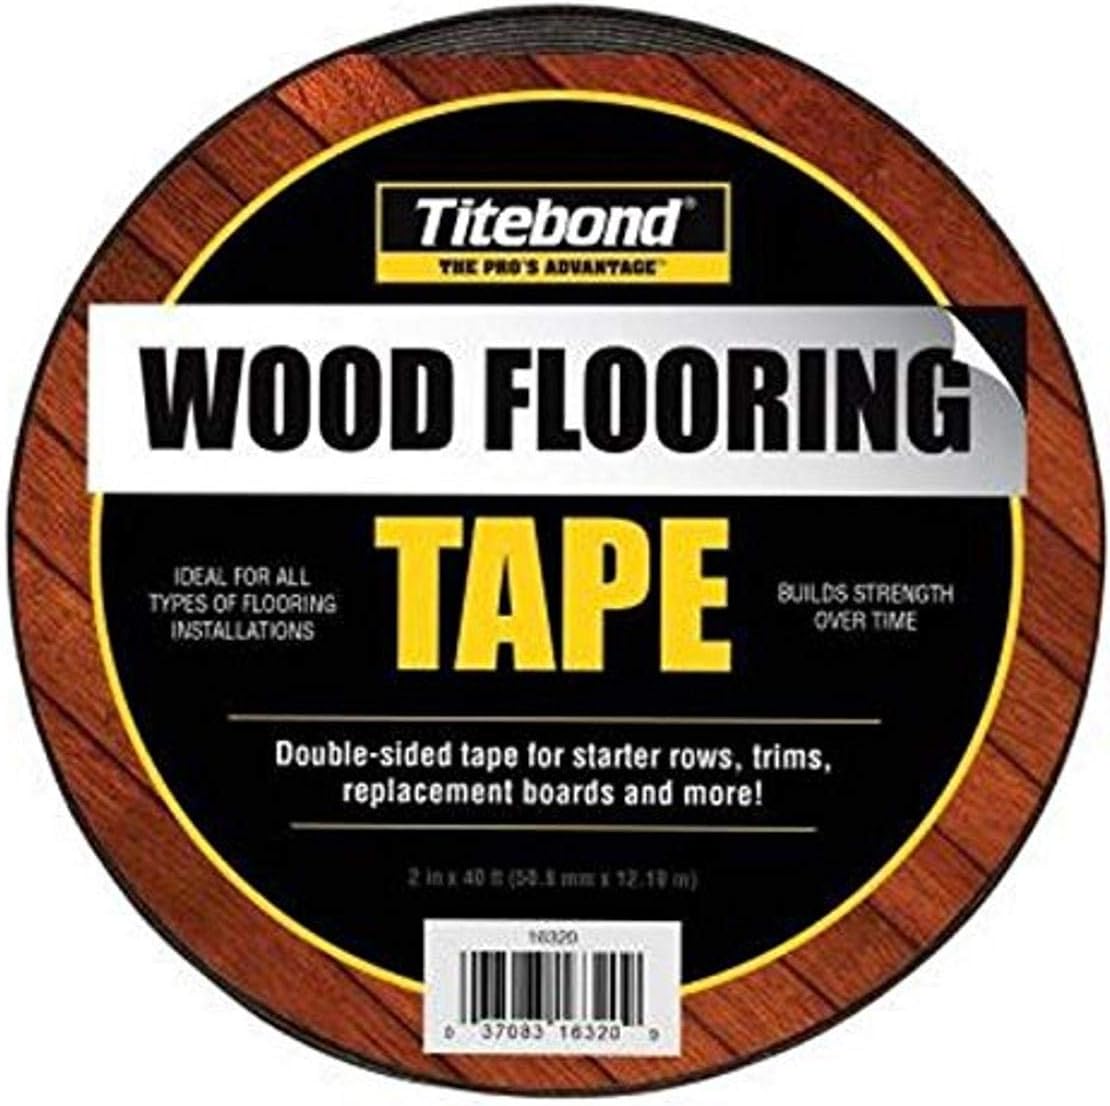 Titebond Wood Flooring Tape 2" x 40'